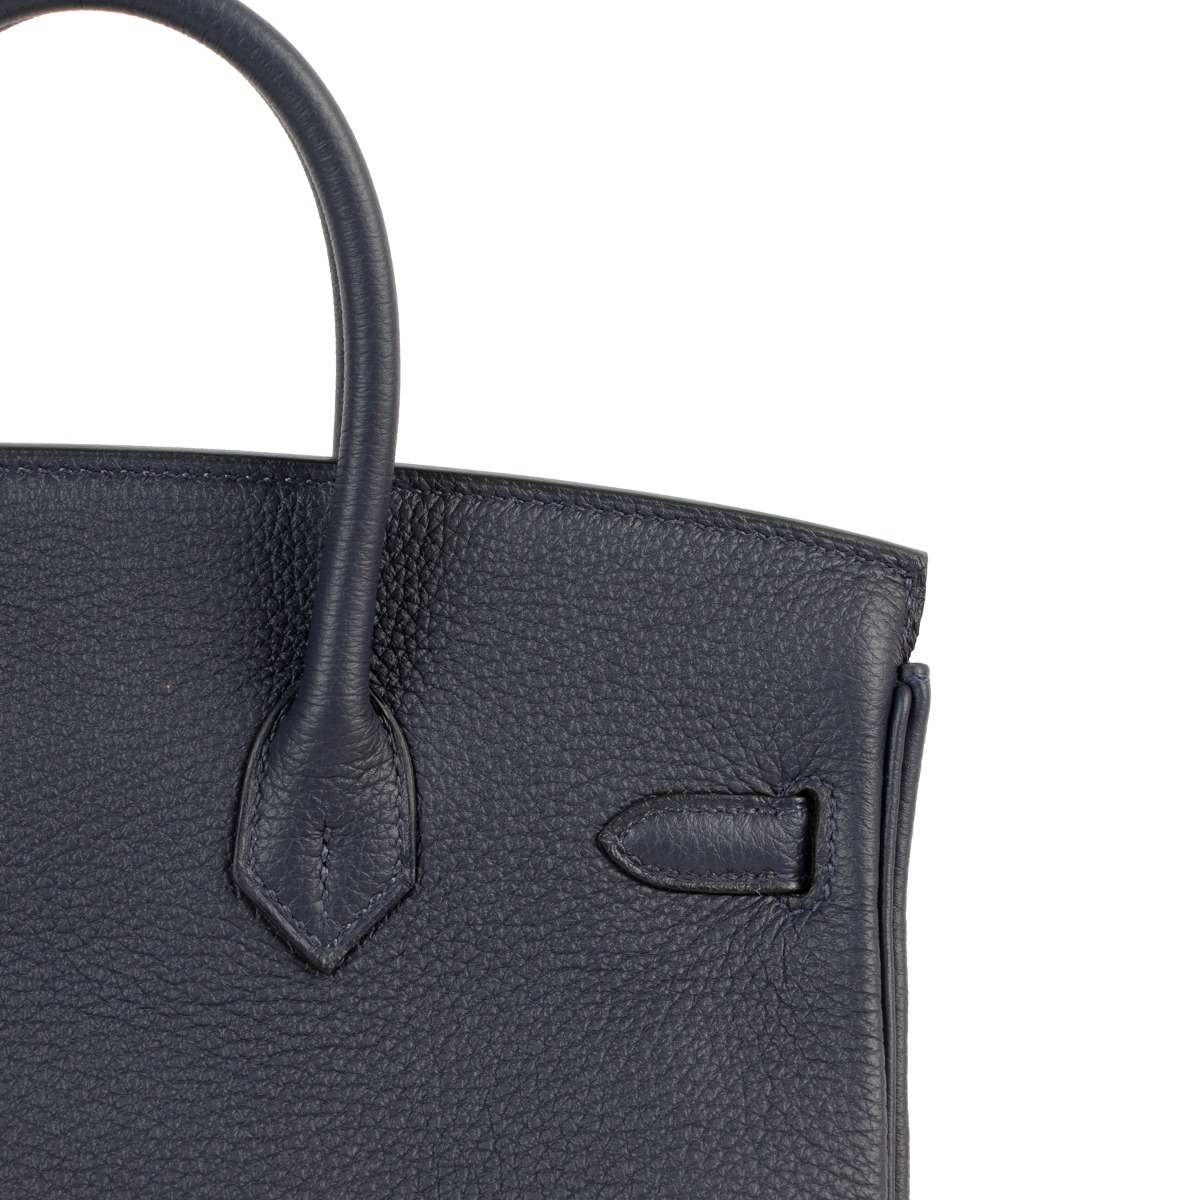 Hermès Birkin 25 Bleu Nuit Togo with Gold Hardware - 2020, Y – ZAK BAGS ©️